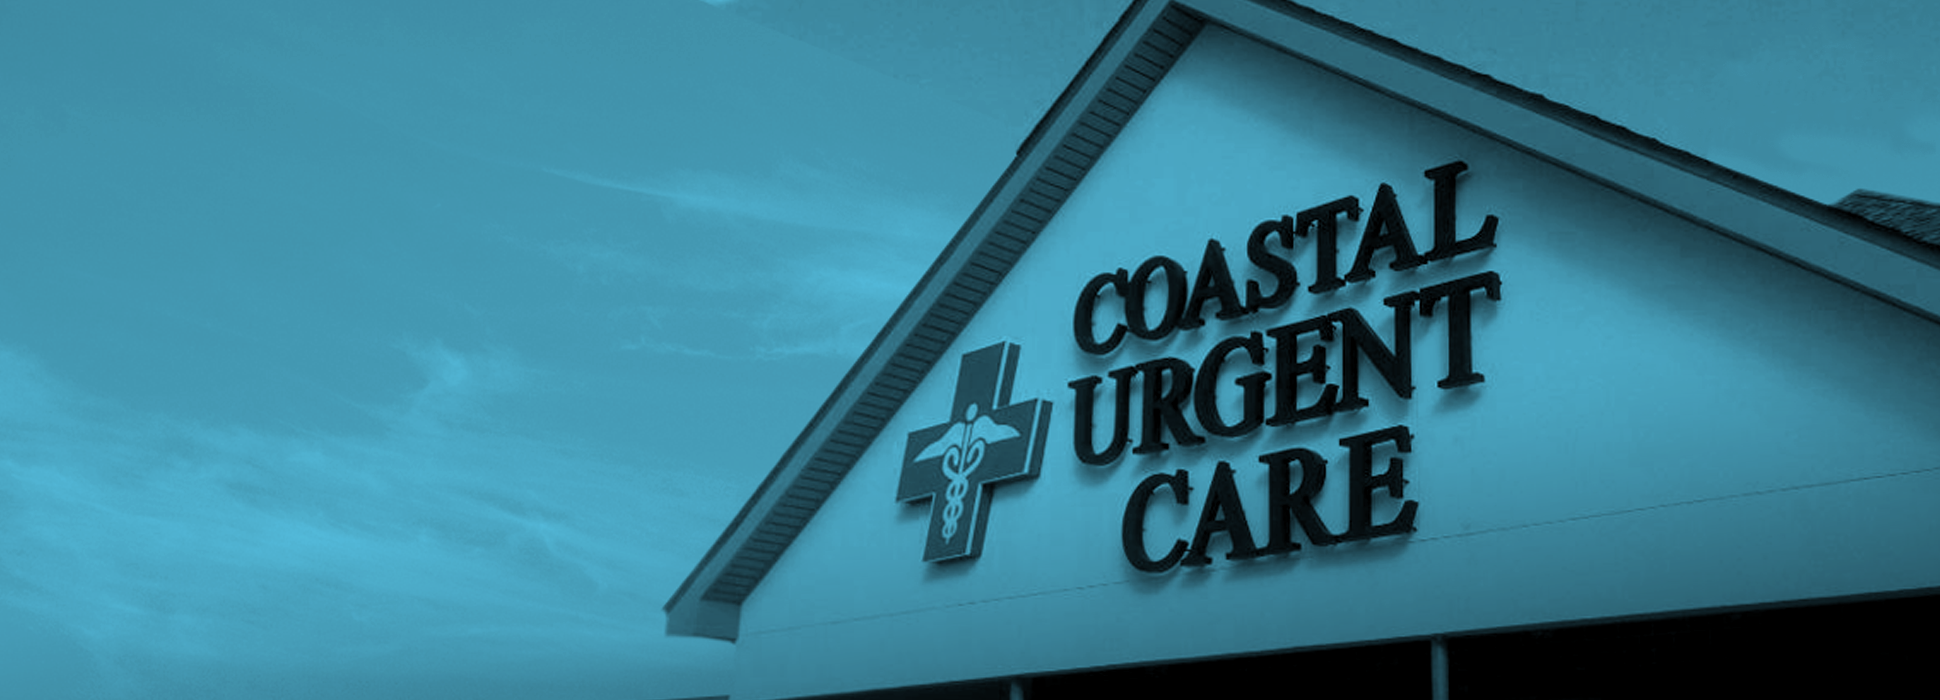 Coastal Urgent Care building roof